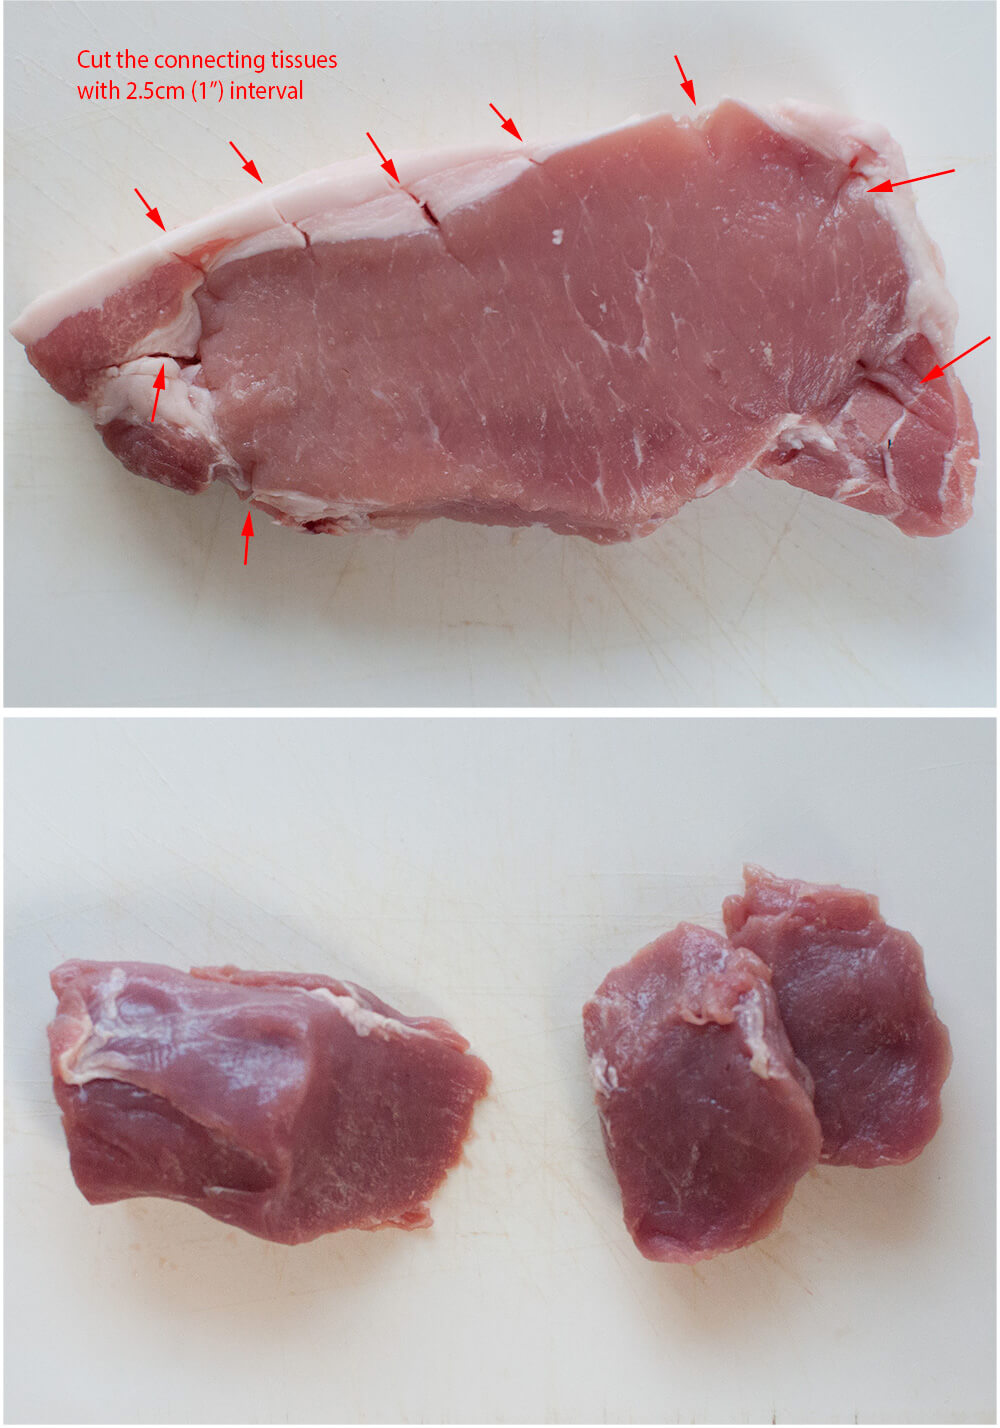 Deviding tissue in pork loin needs to be cut. Pork tenderloin can be sliced into large bite sizes.